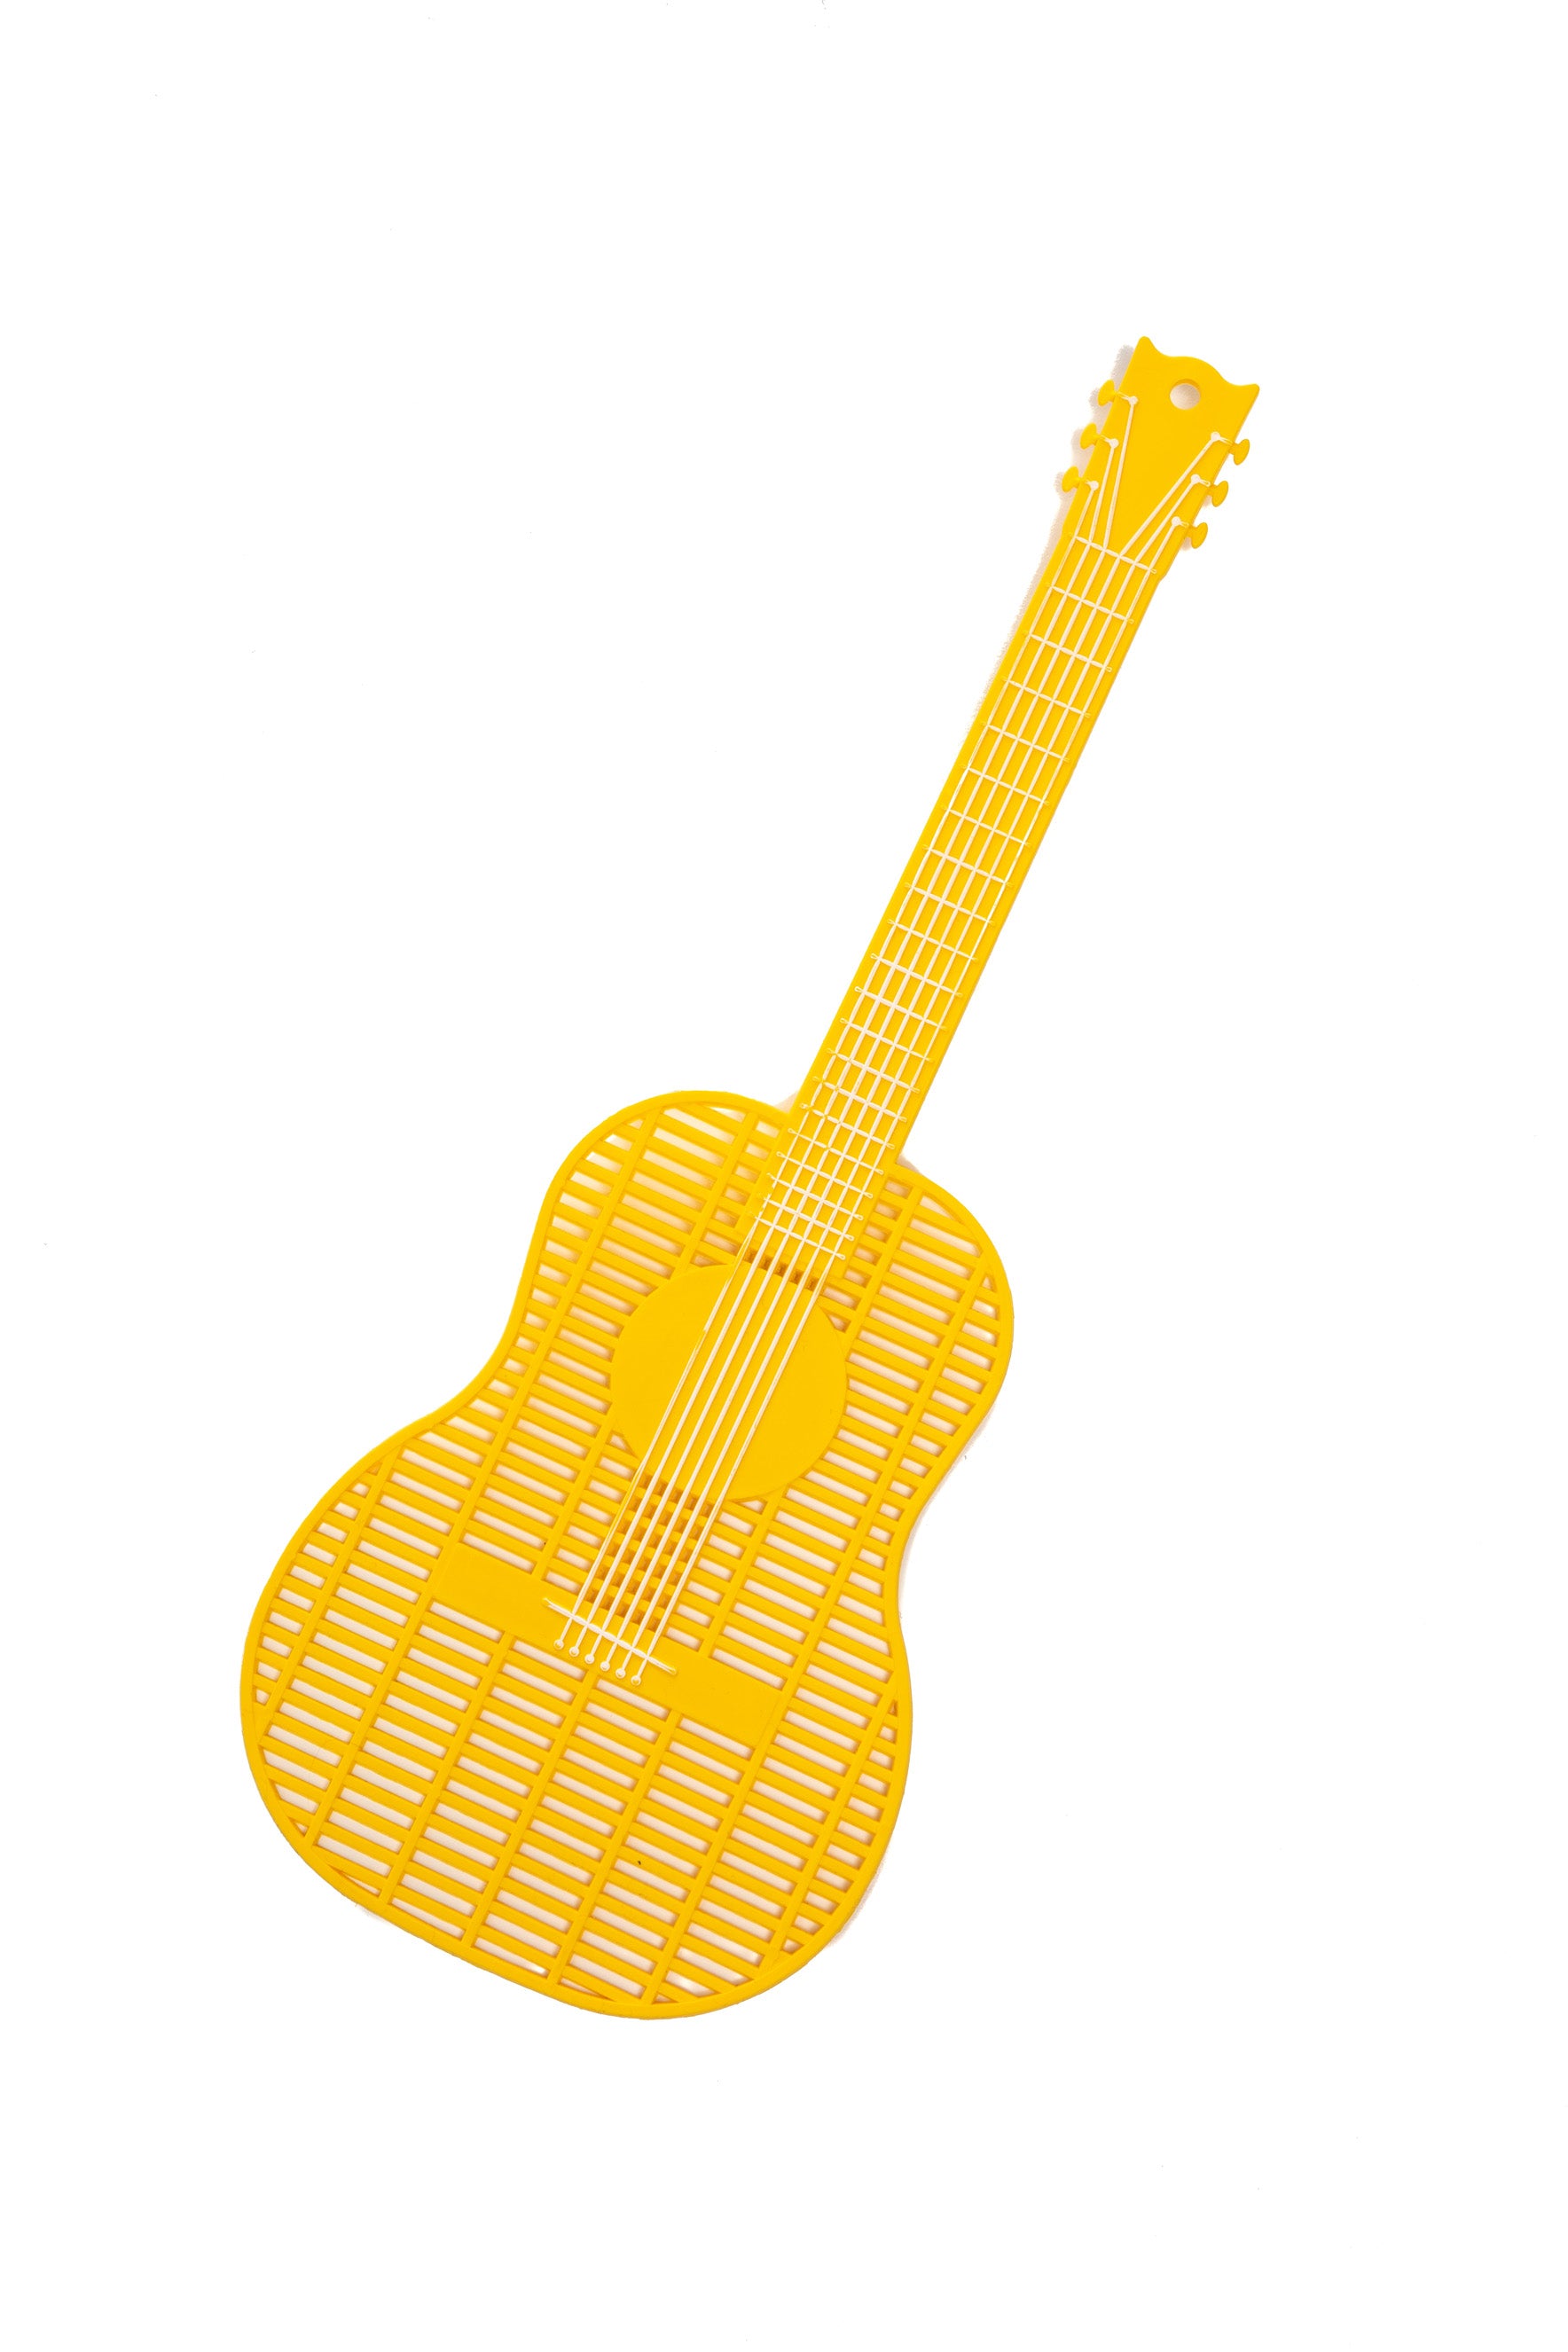 Ryman Guitar Flyswatter